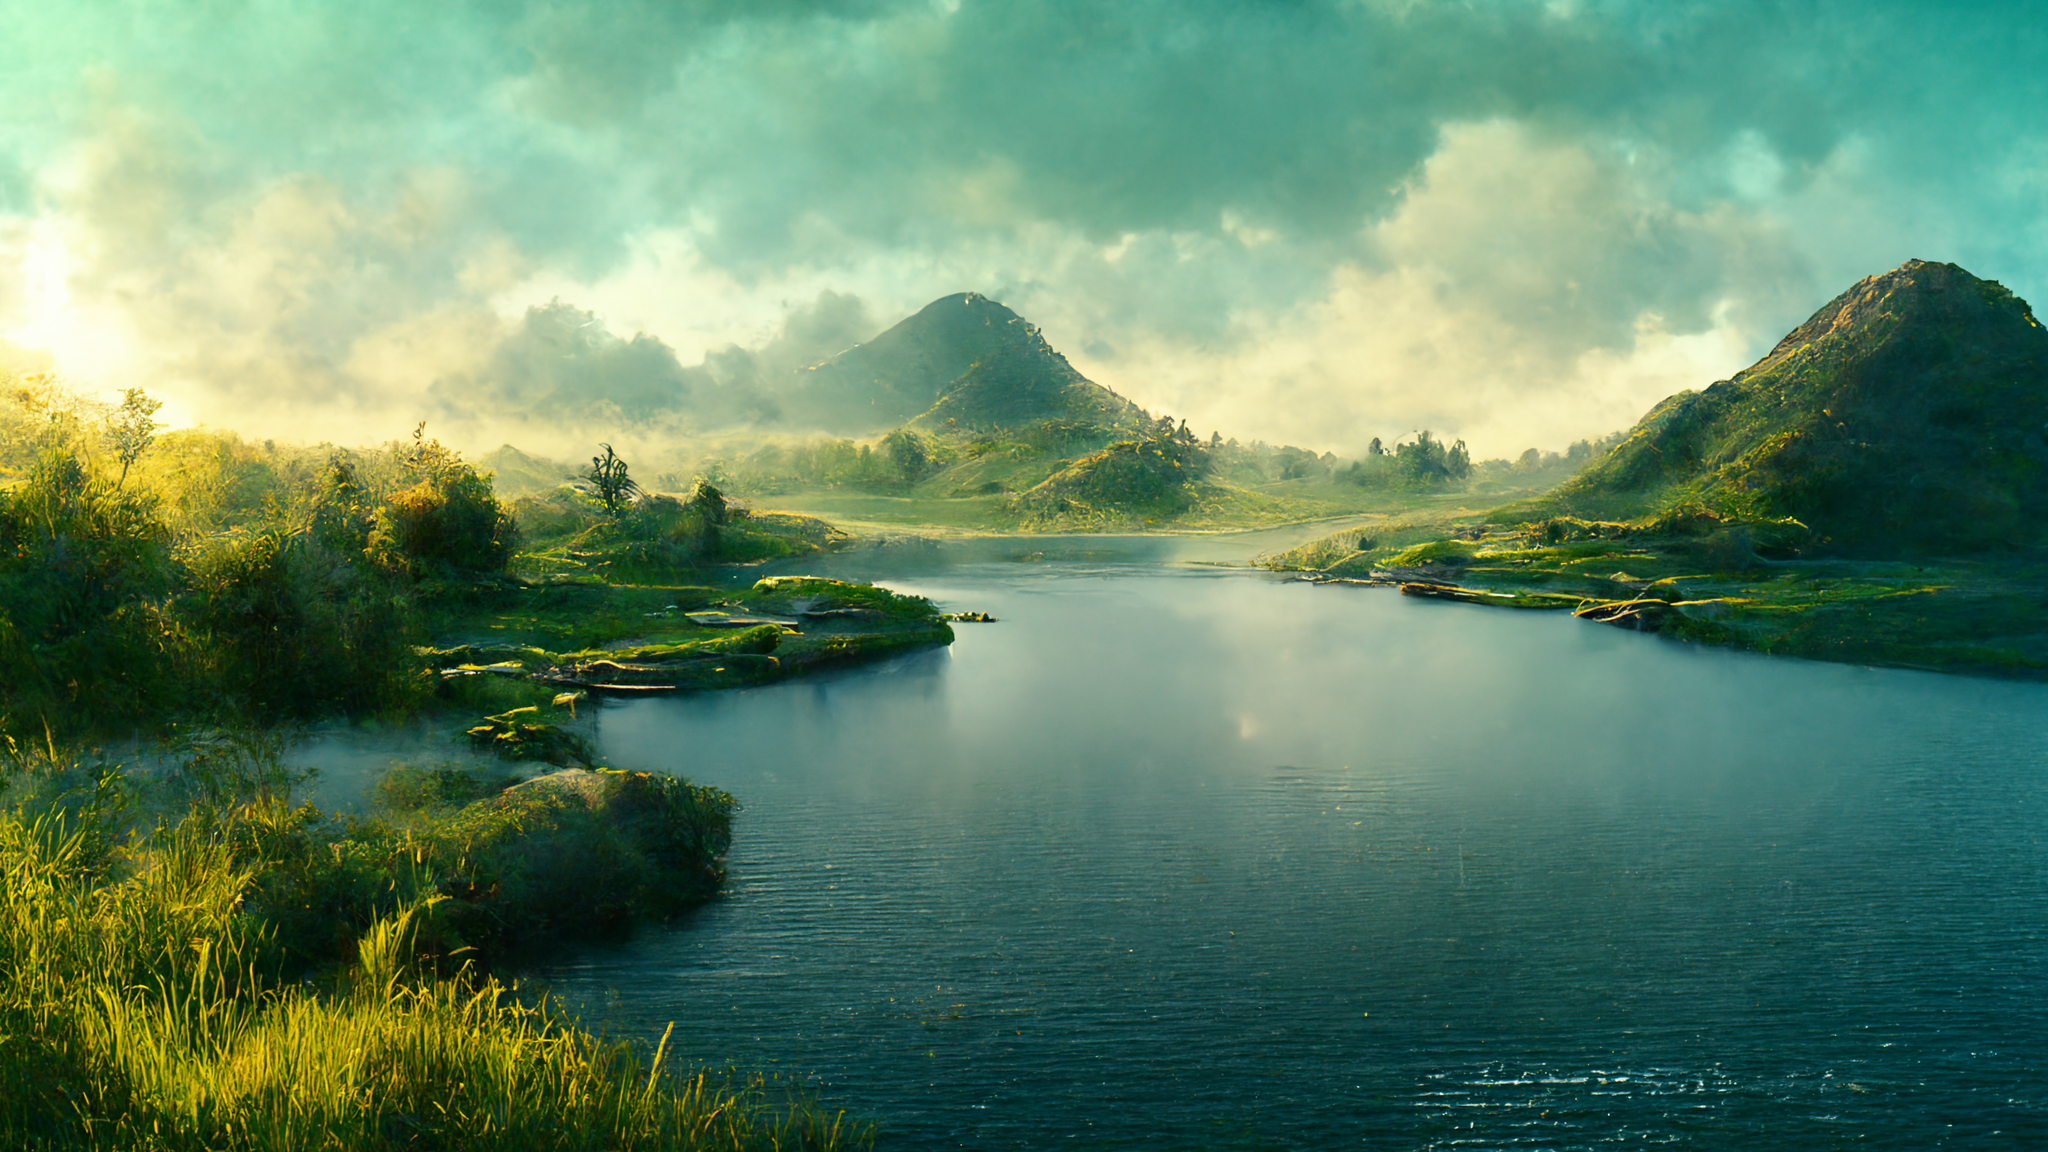 General 2048x1152 lake peaceful water blue green mountains landscape field clouds smog mist grass hills AI art